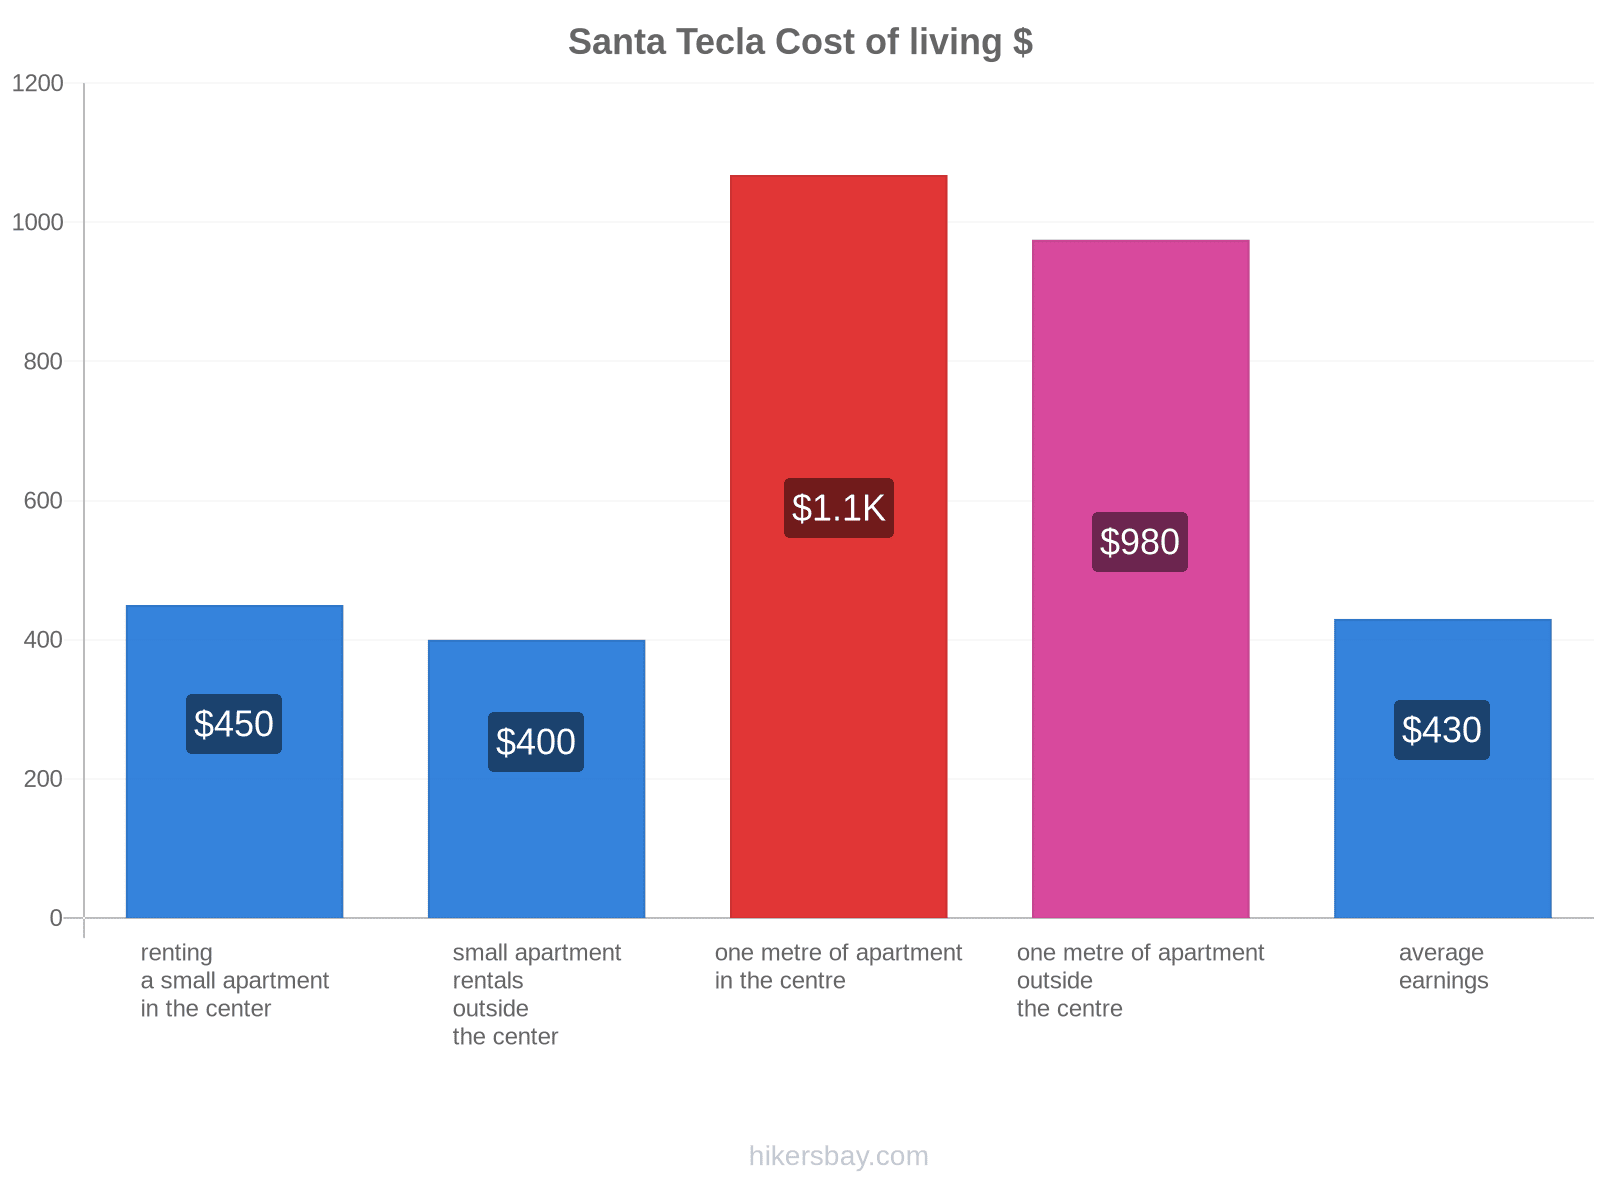 Santa Tecla cost of living hikersbay.com